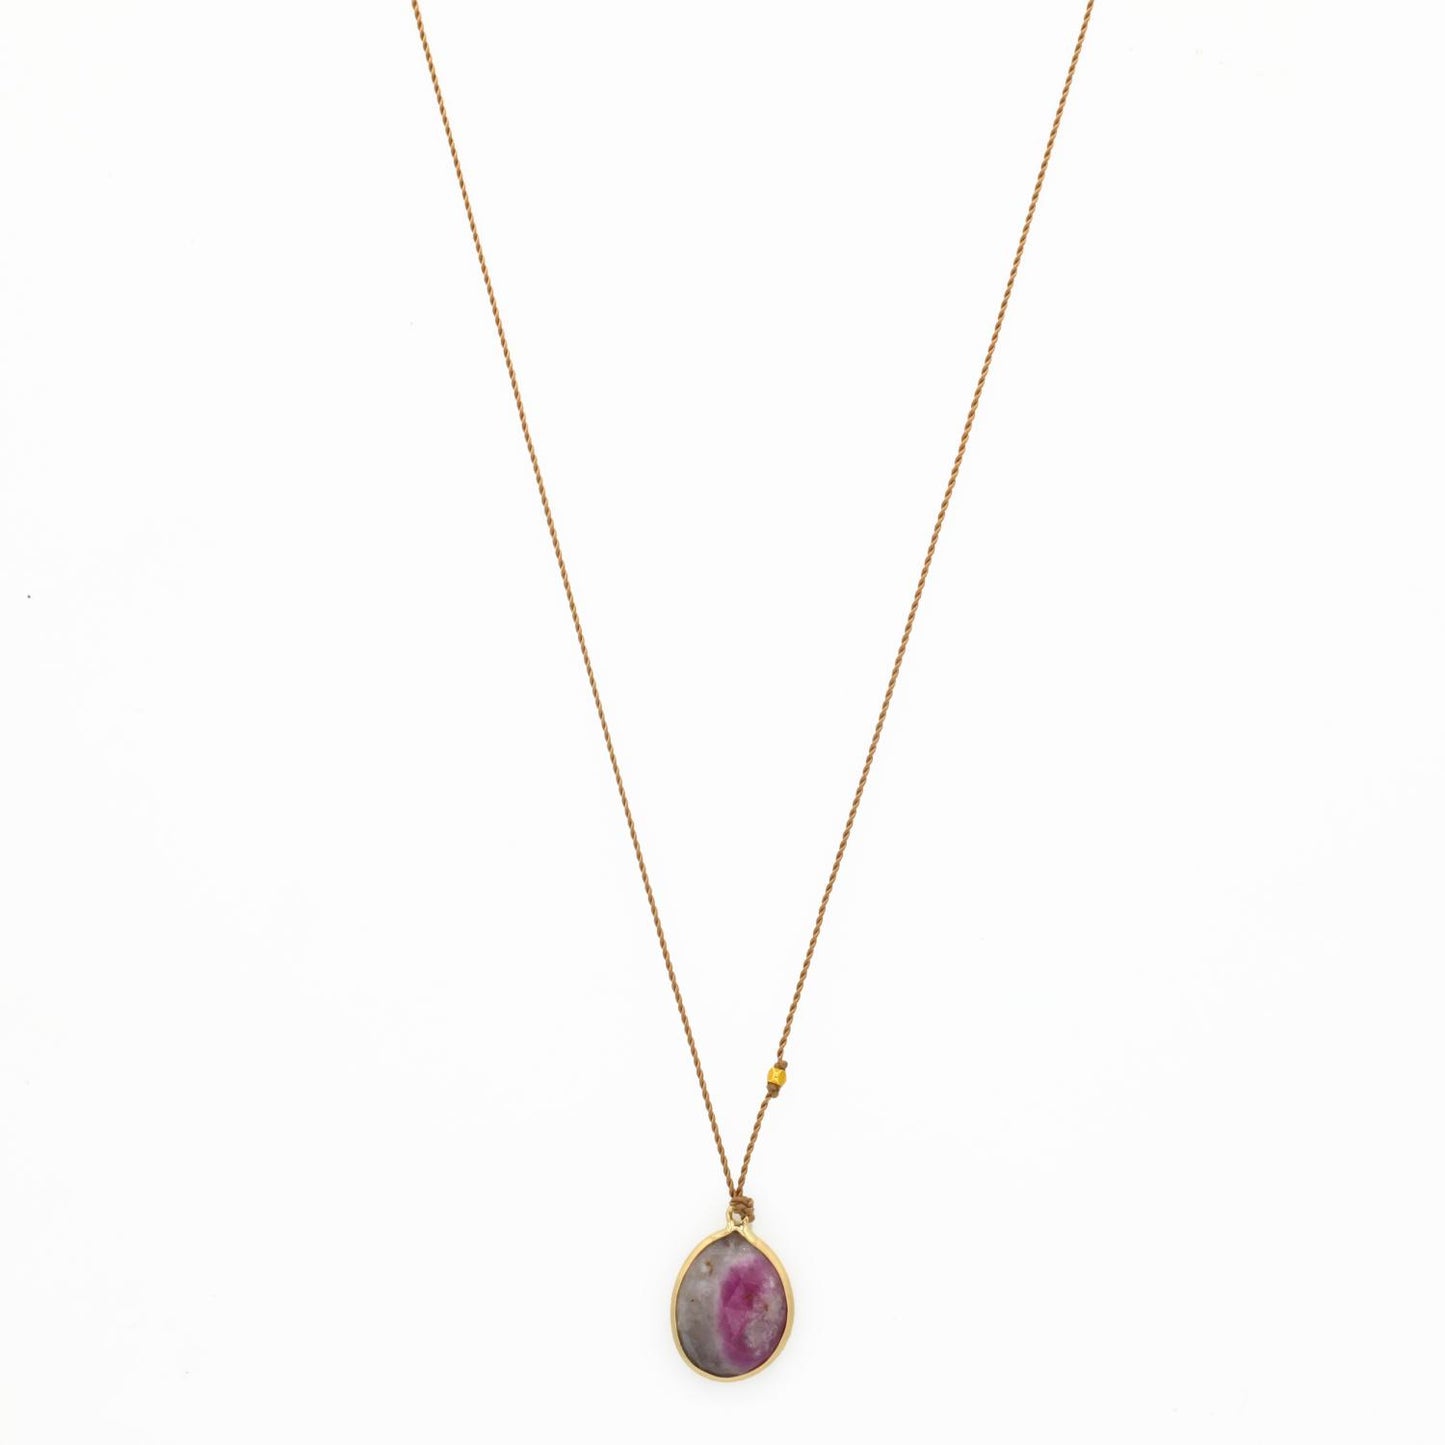 Margaret Solow Jewelry | Opaque Ruby + 14k Gold Drop Necklace | Firecracker